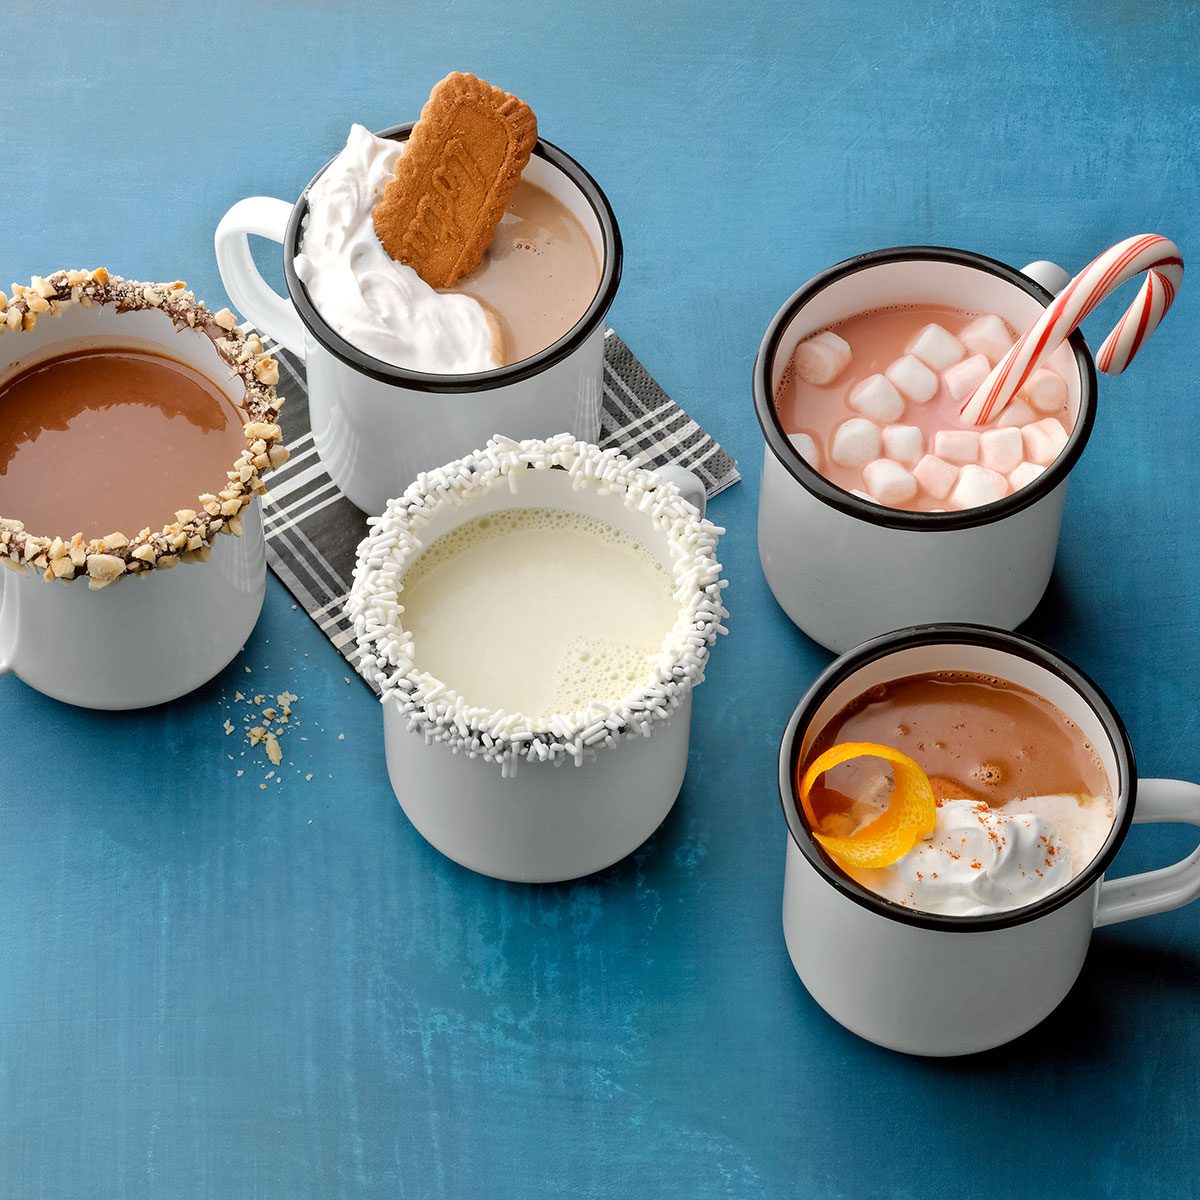 5 Fun Ways to Enjoy Hot Chocolate